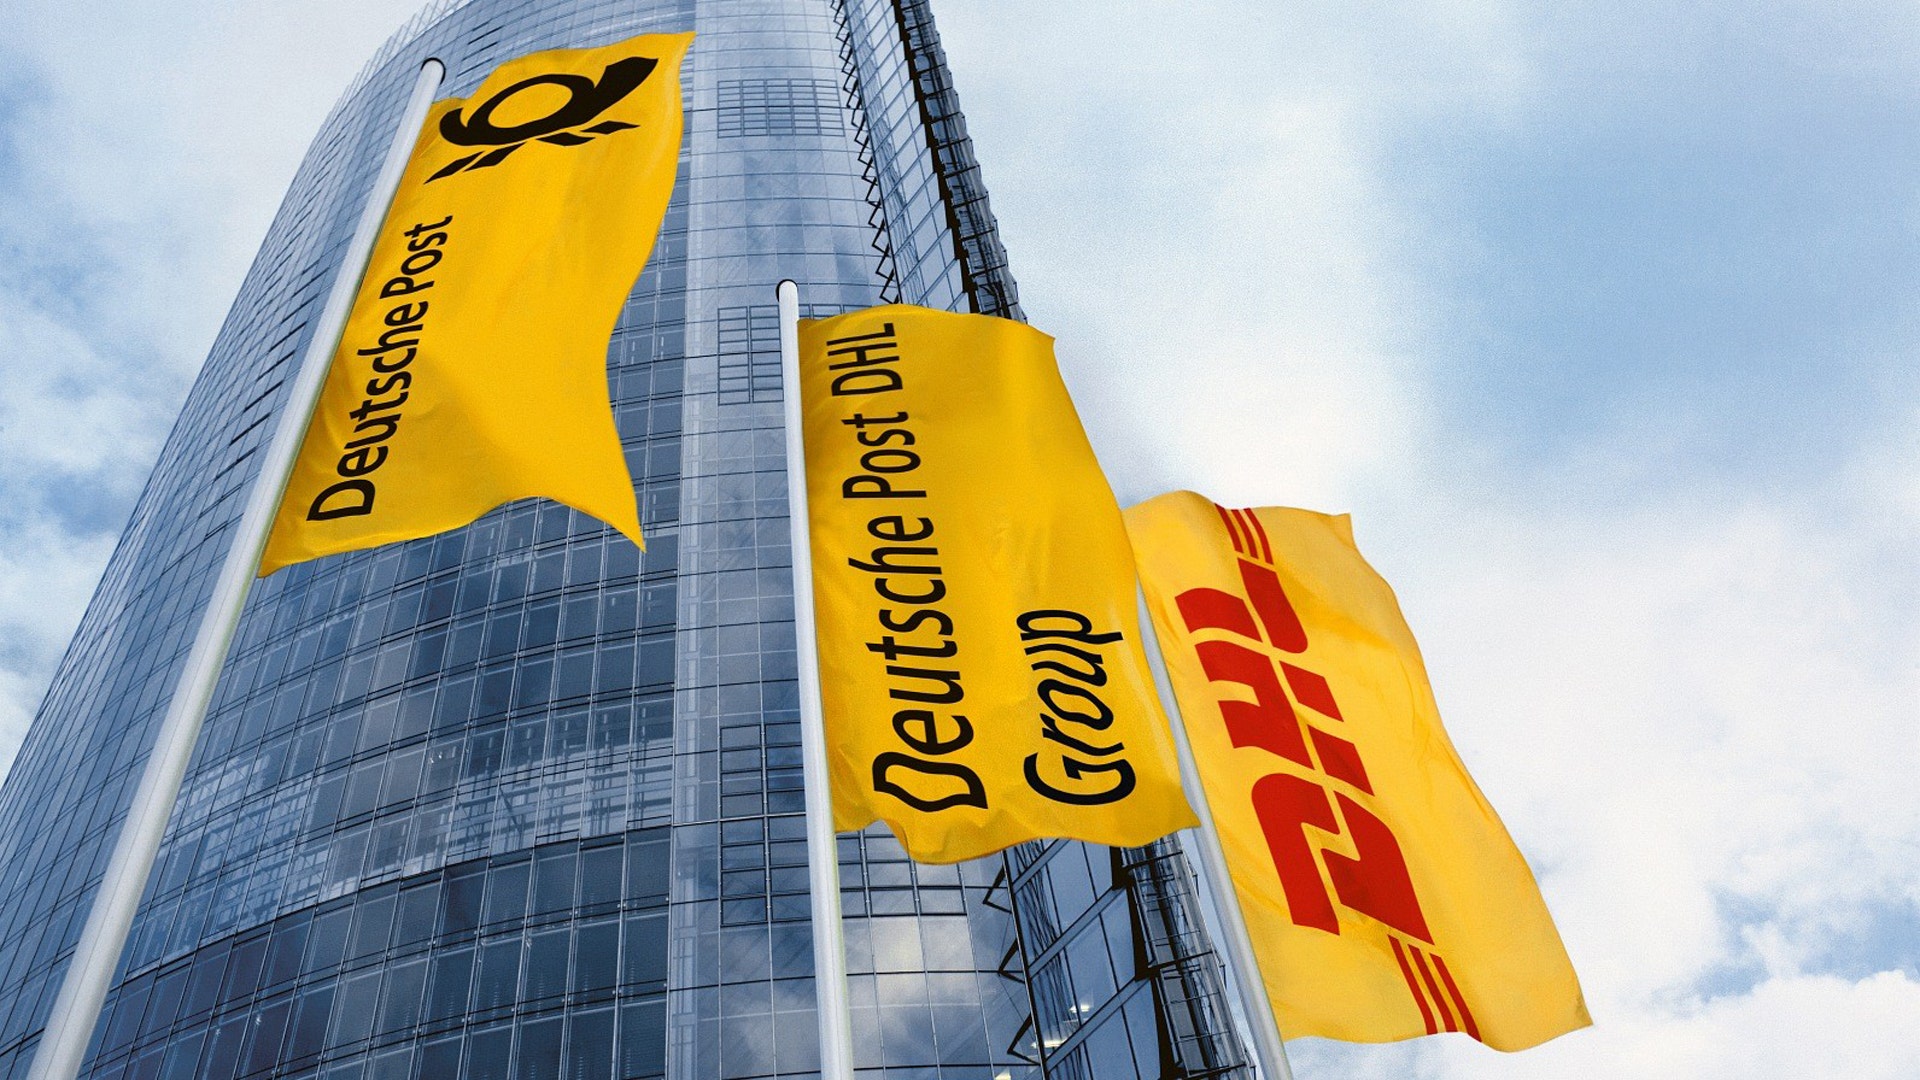 Deutsche Post DHL Raises 2020 Earnings Guidance